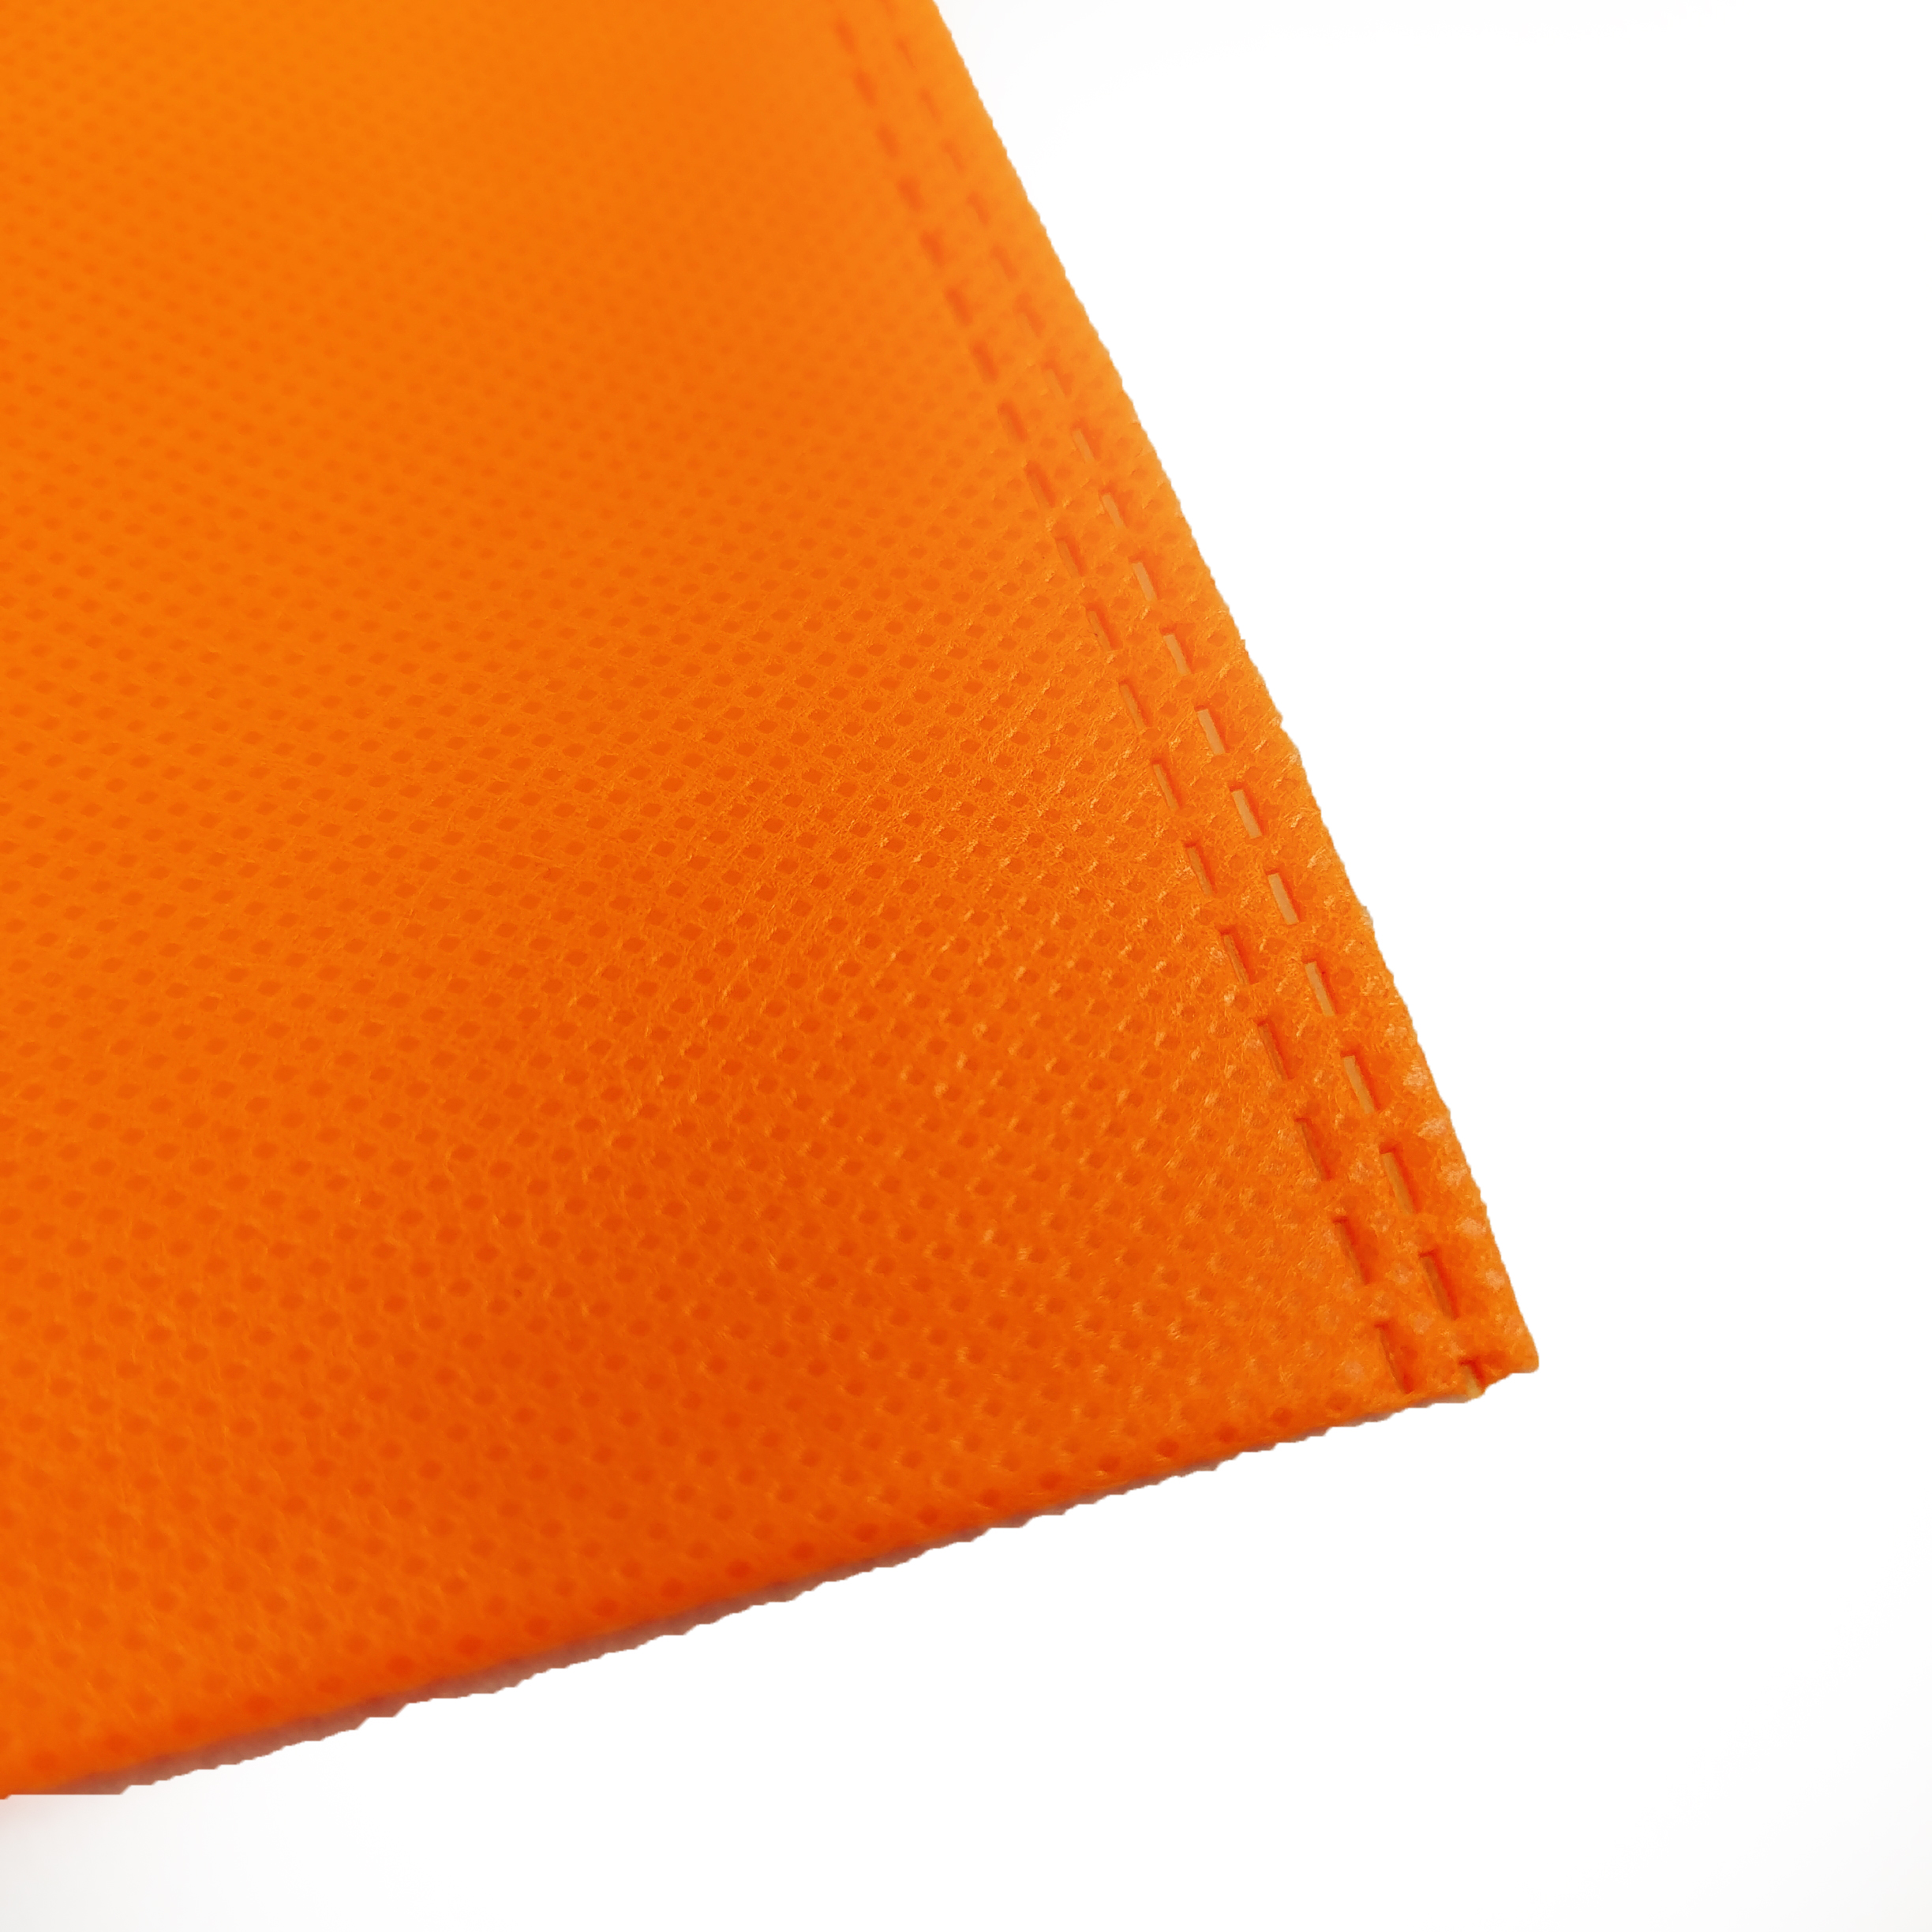 colour 100%pp eco-friendly shopping laminated non woven customized bag